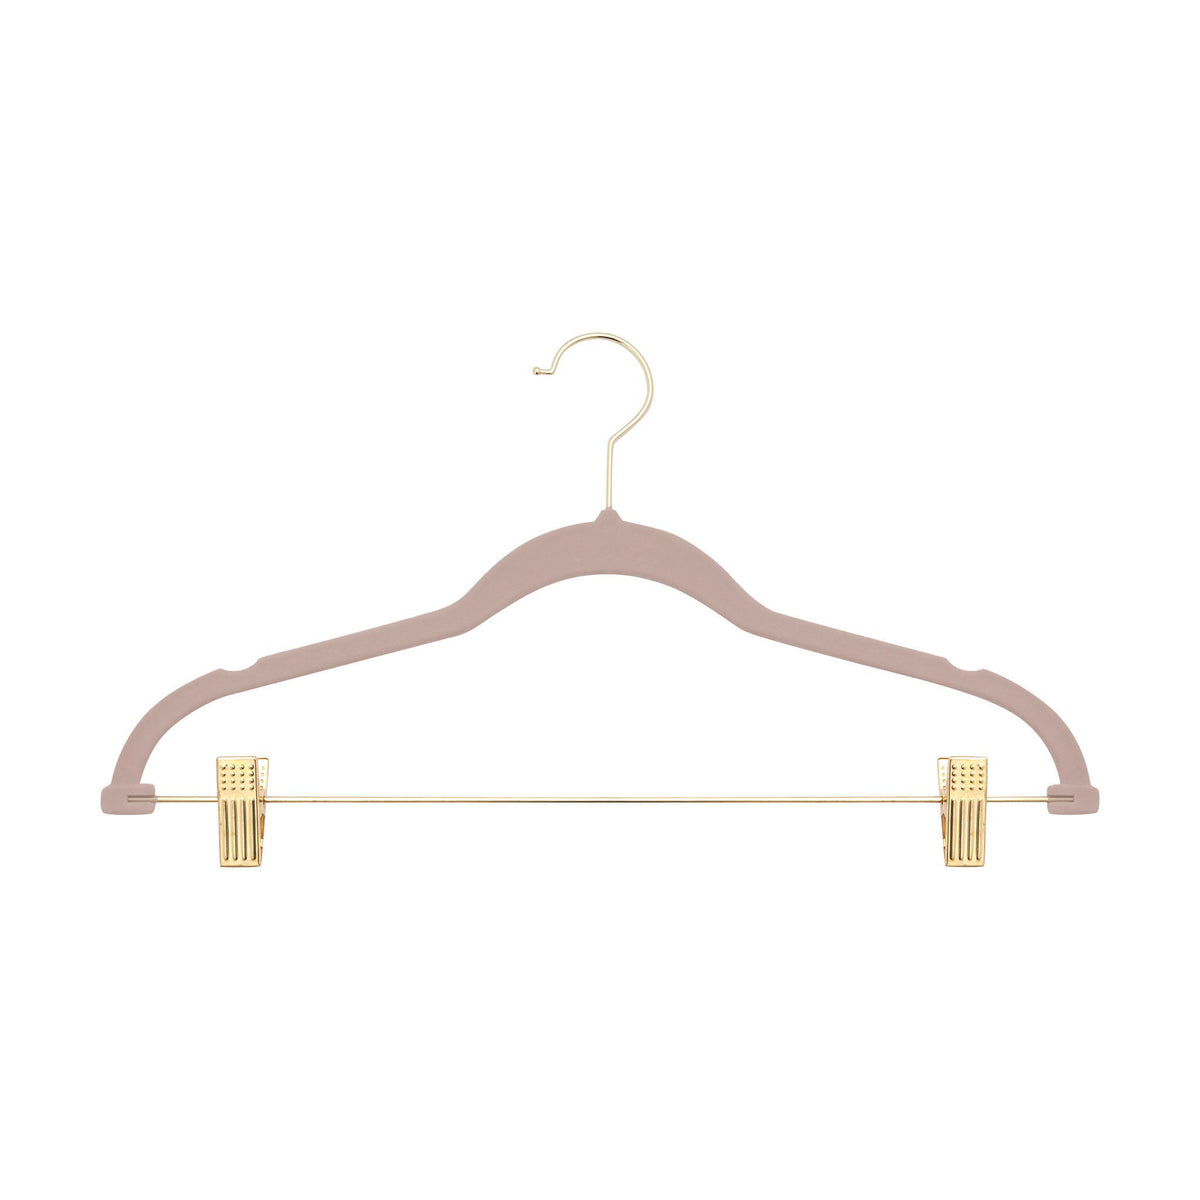 Bon Maxie Coat Hangers No-Slip Flocked Pant/Skirt Hangers - Box 10 (Gold/Silver)